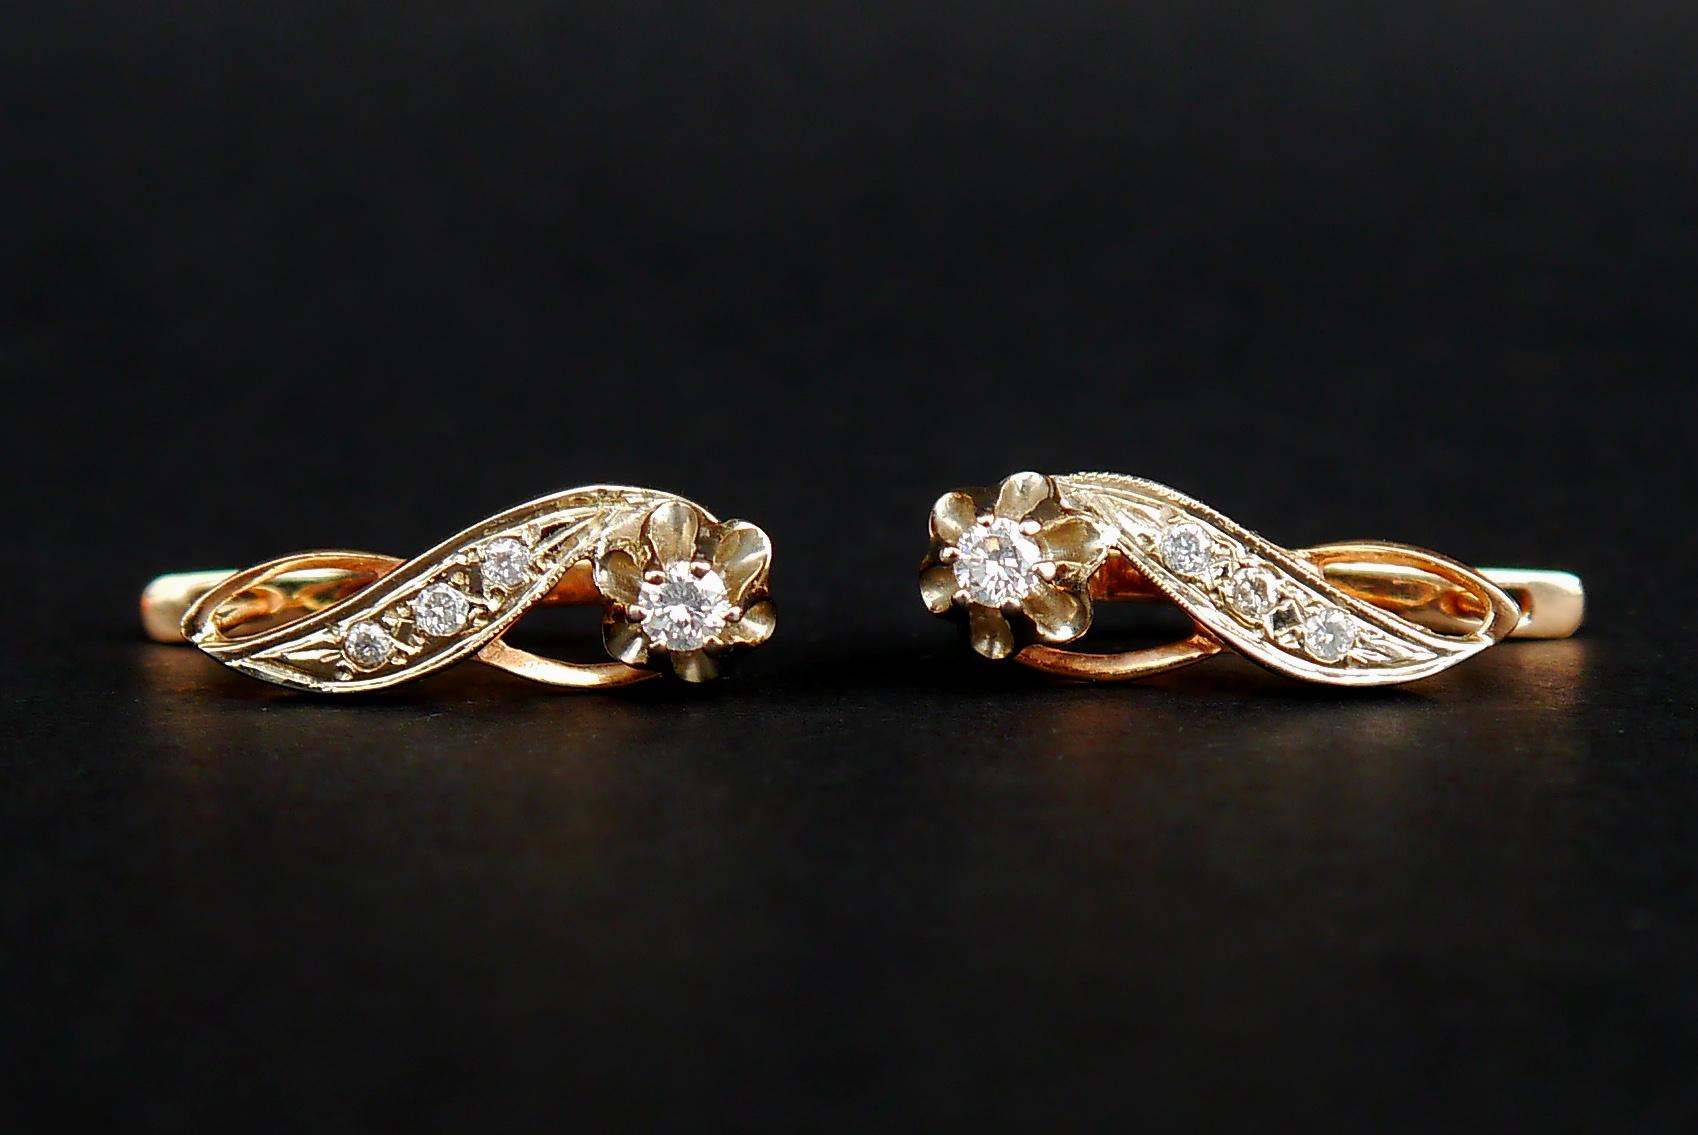 Vintage Russian Earrings 0.45ctw Diamond solid 14K Rose Gold / 5 gr For Sale 2